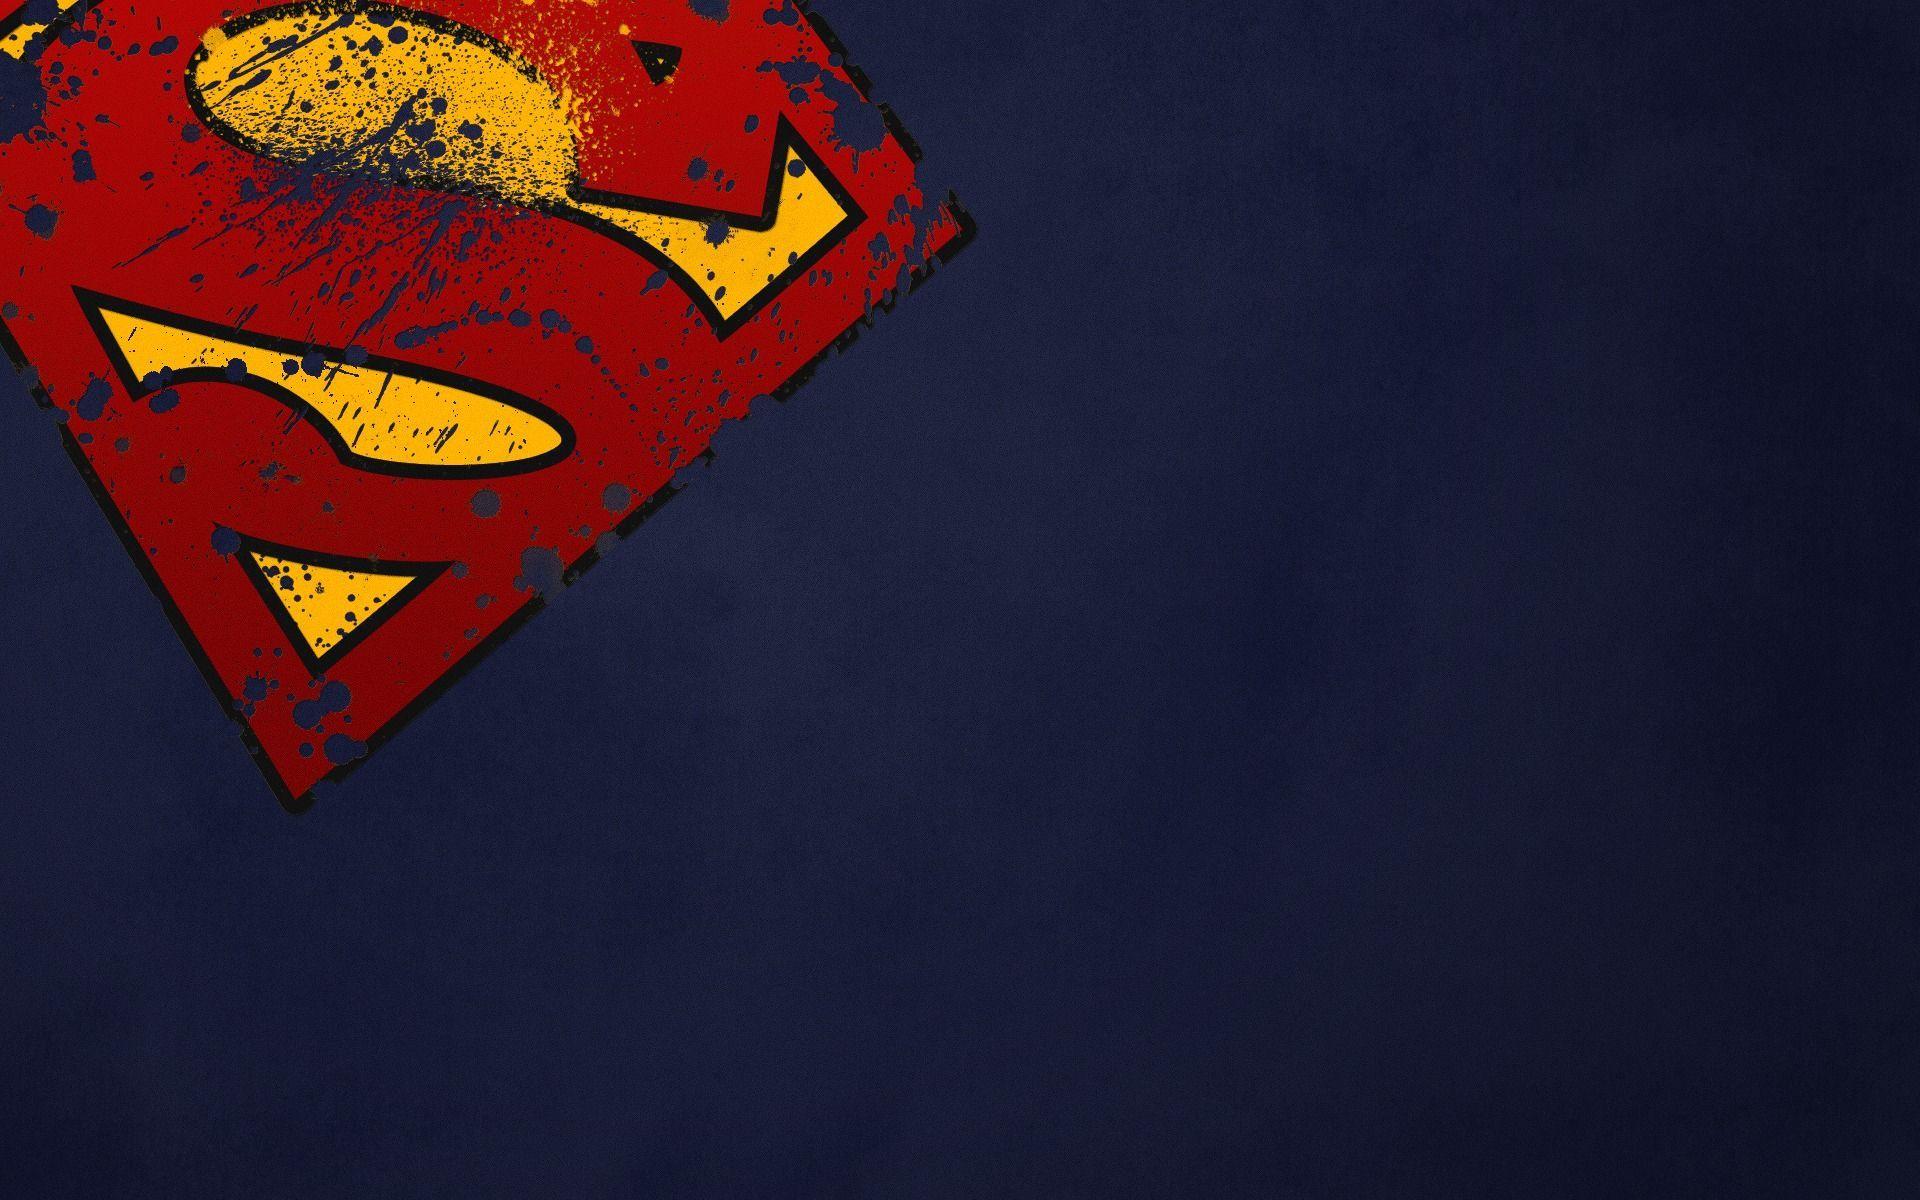 Superman Background